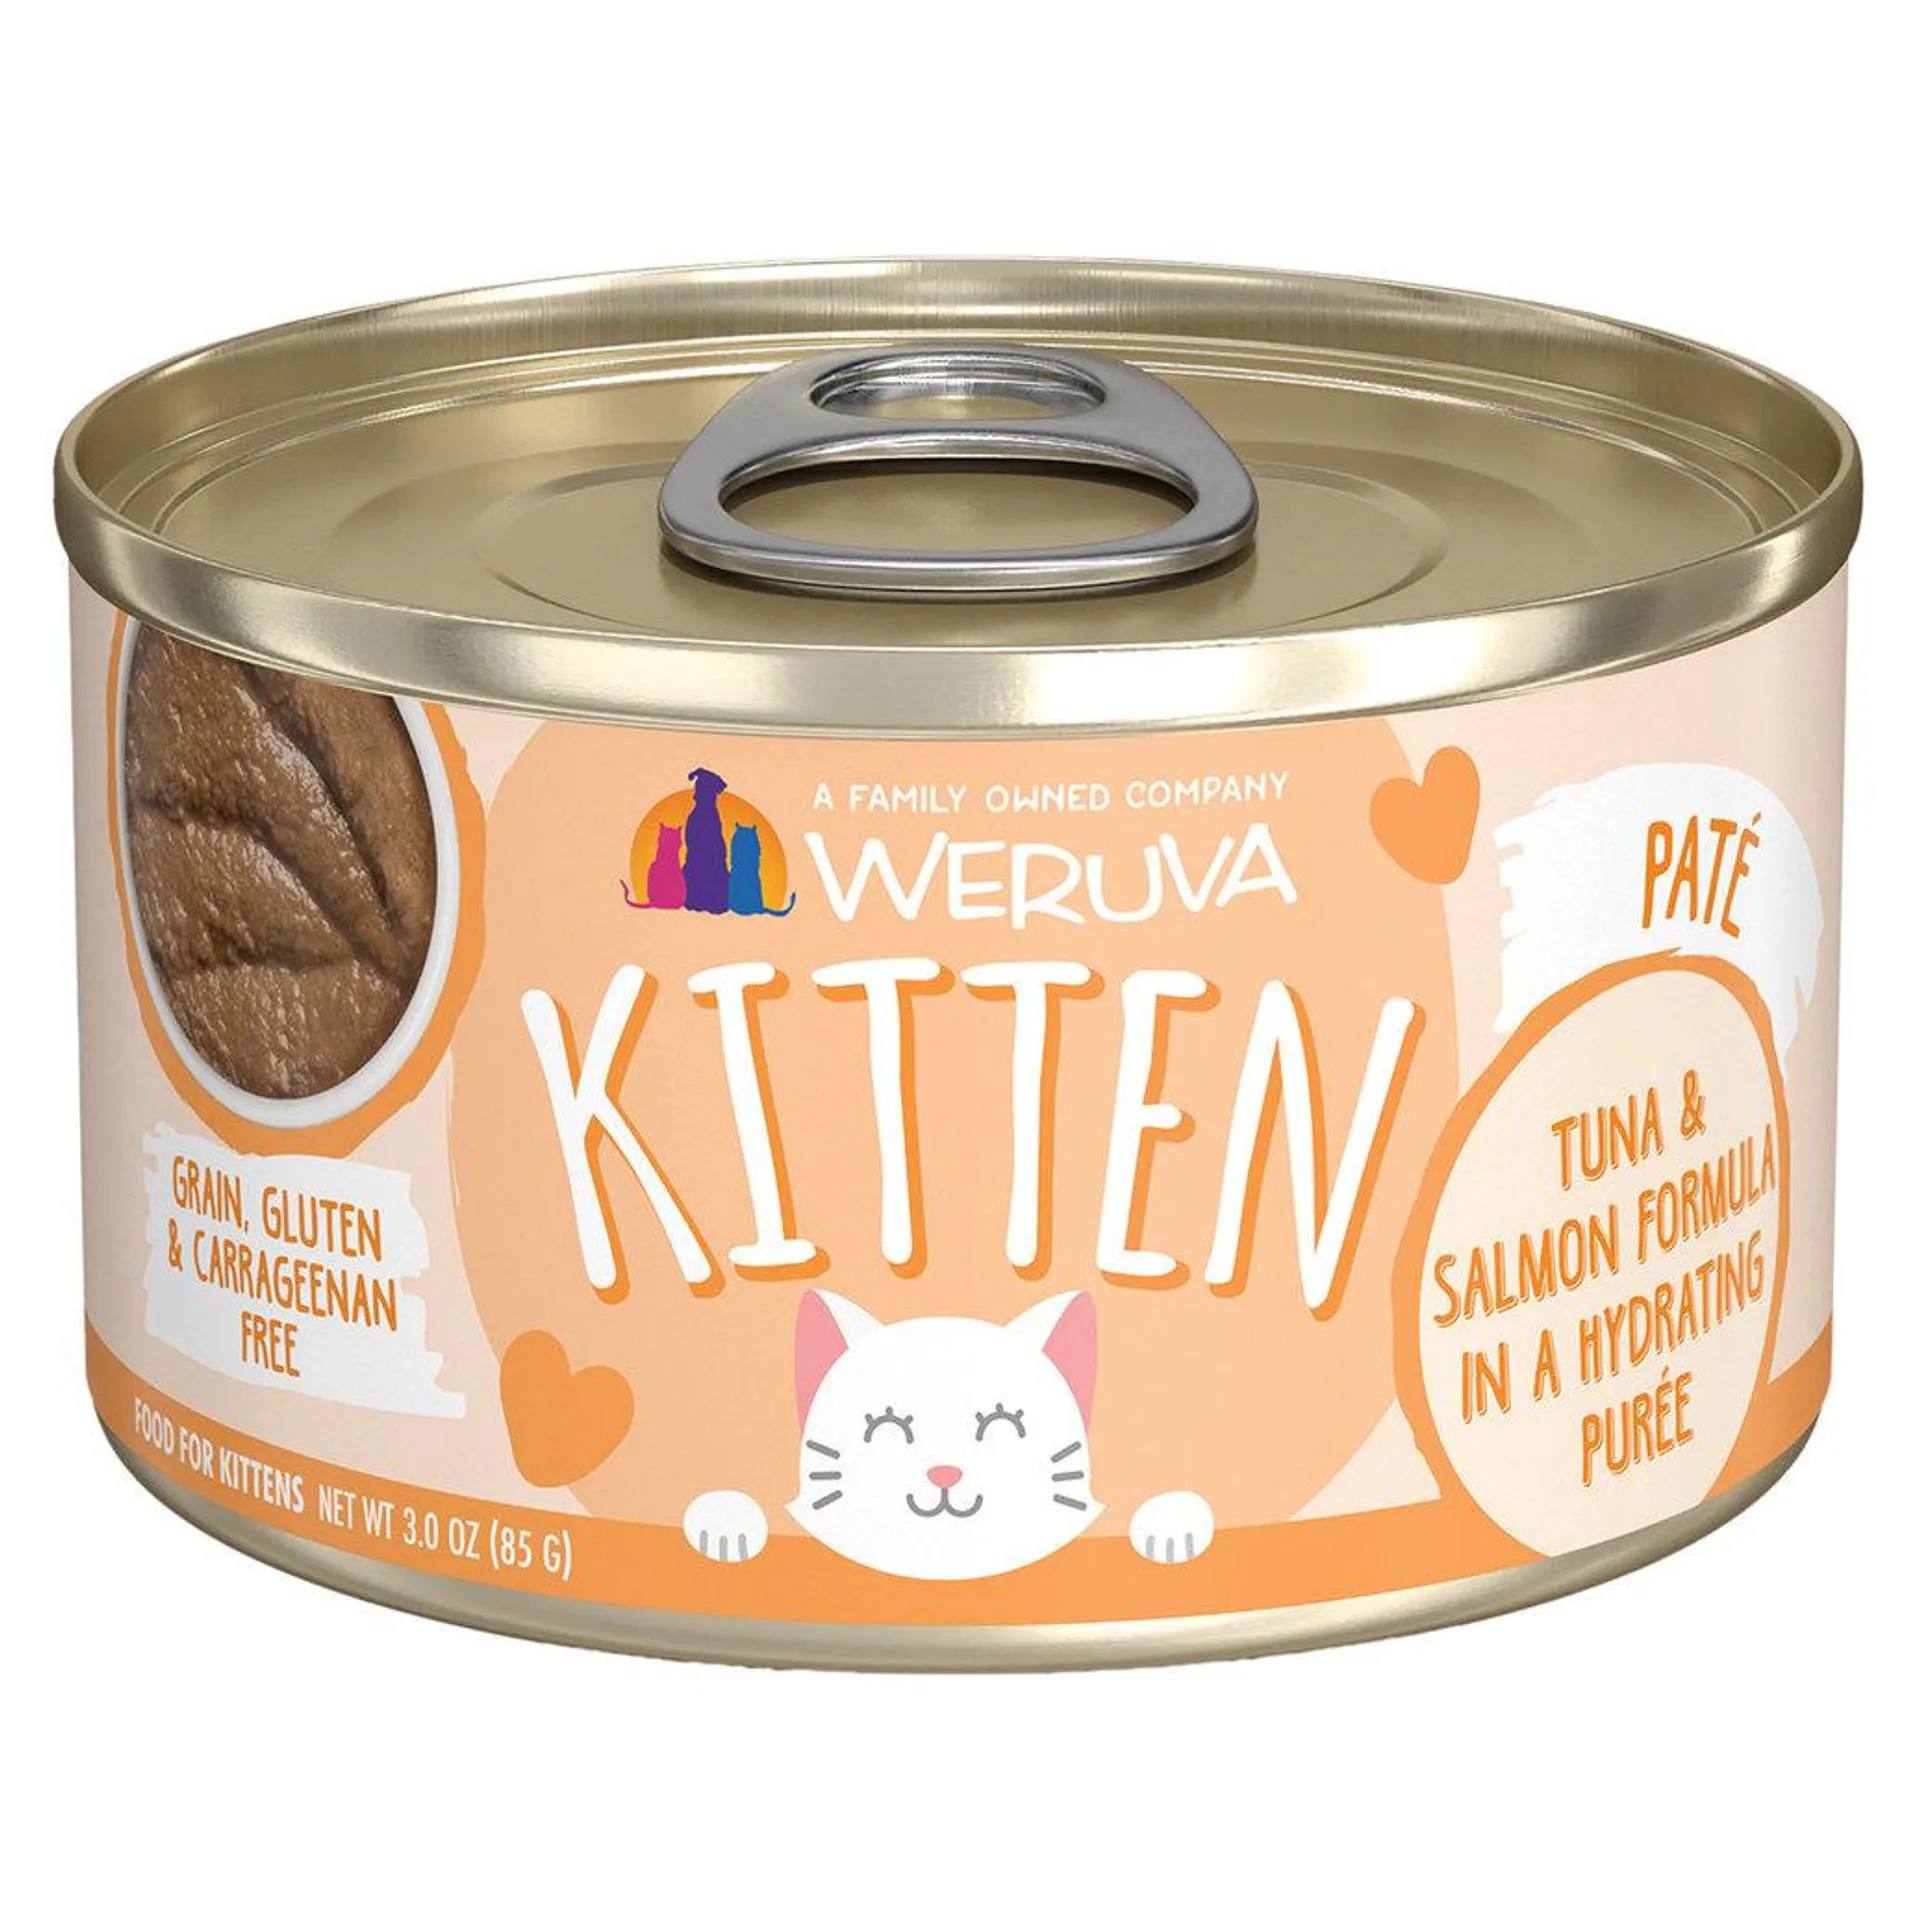 Weruva, Can, Kitten, Tuna & Salmon in Hydrating Puree - 85 g - Pate - Wet Cat Food